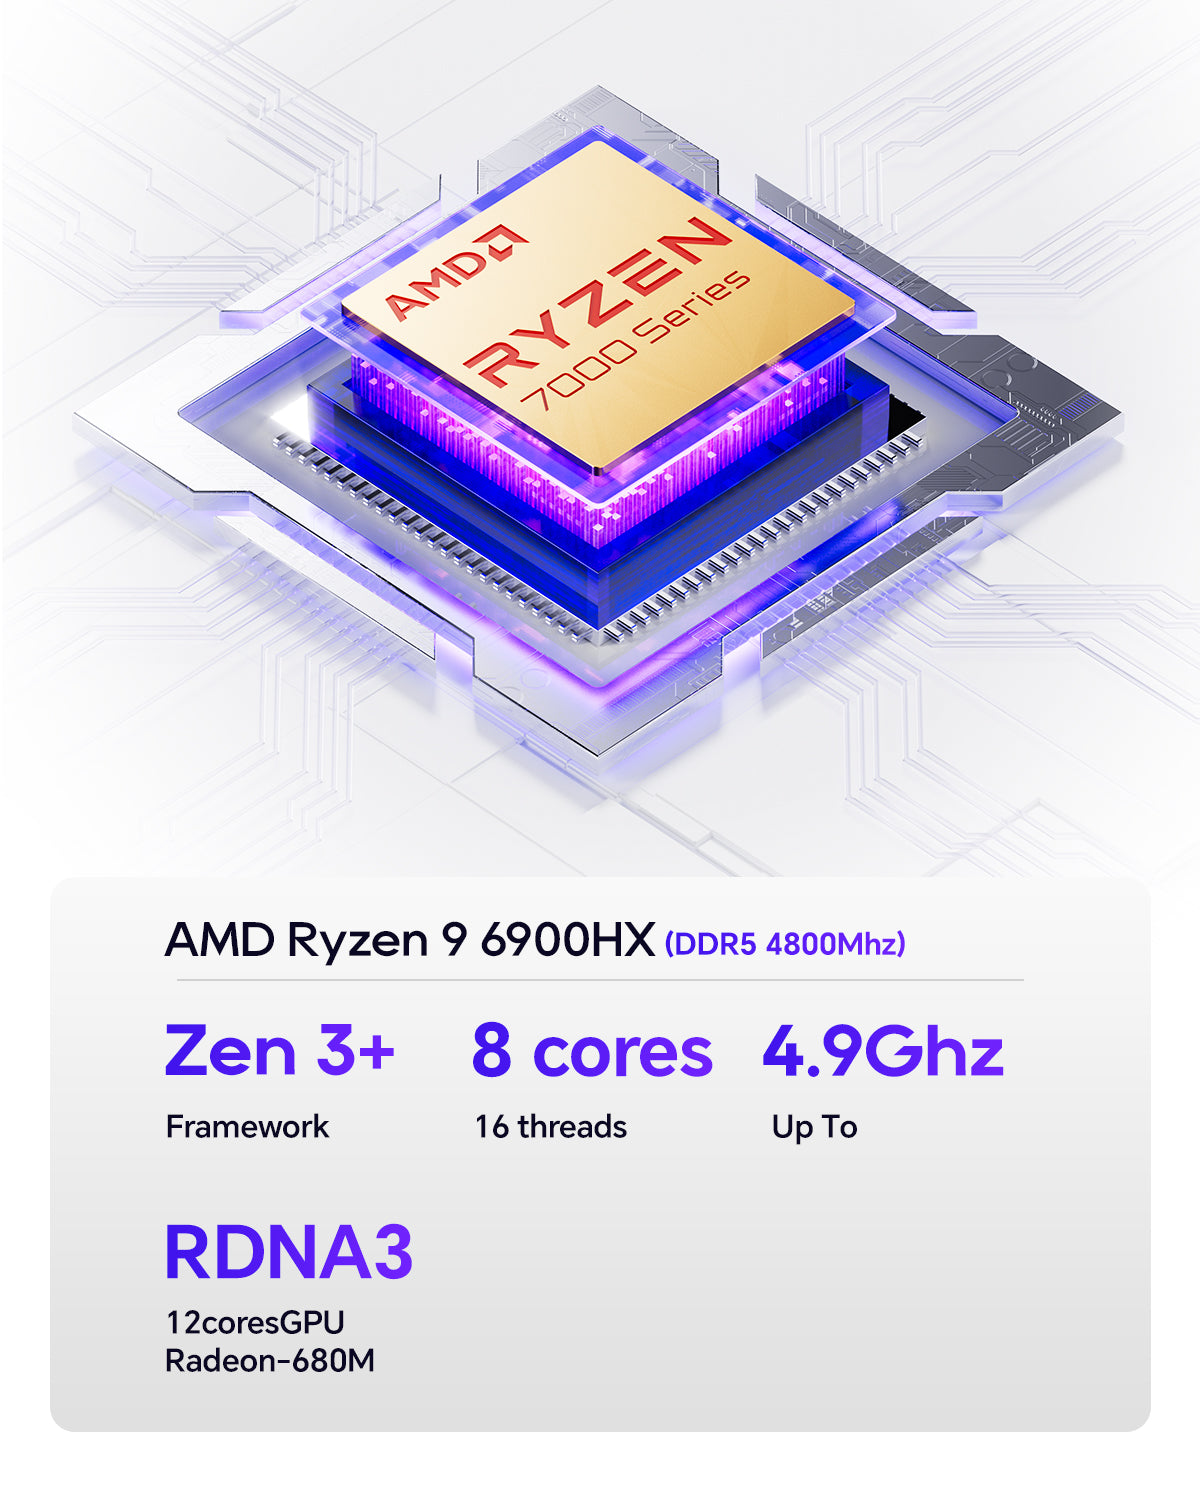 AOOSTAR GEM12 AMD Ryzen 9 6900HX Mini PC with 16/32G DDR5 RAM 512G/1T PCle 4.0 SSD WIN 11 PRO/ 2* NVME/Oculink/2*2.5G LAN (Non-screened version)